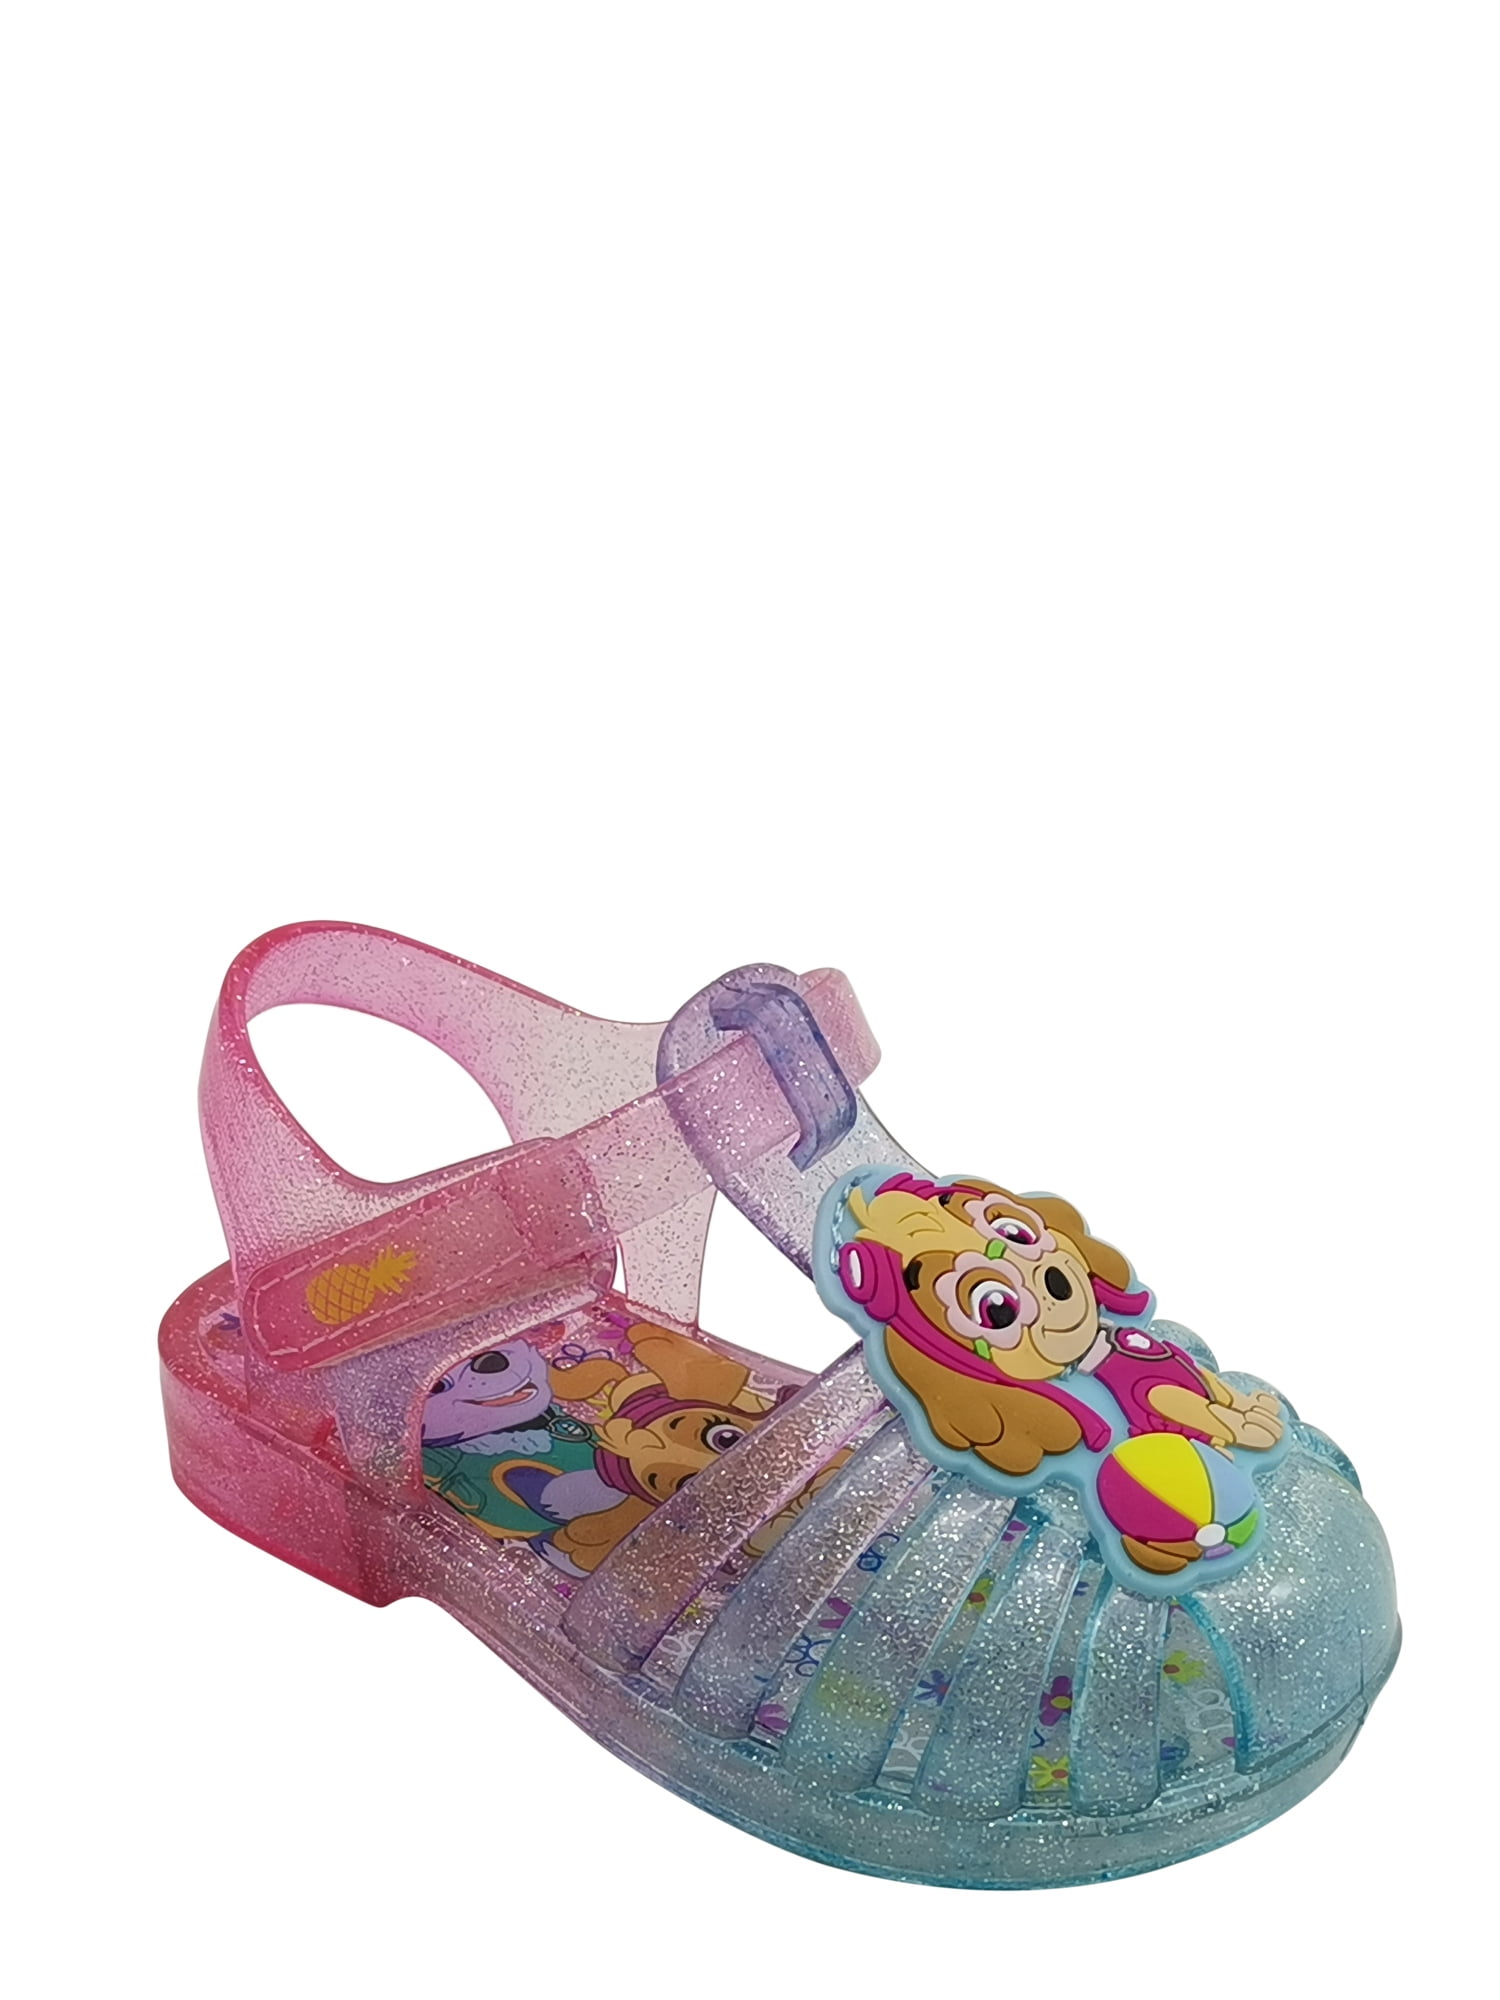 Disney Paw Patrol Girls Toddler Pink Glitter Casual Jelly Slipon Shoe Size 8 New